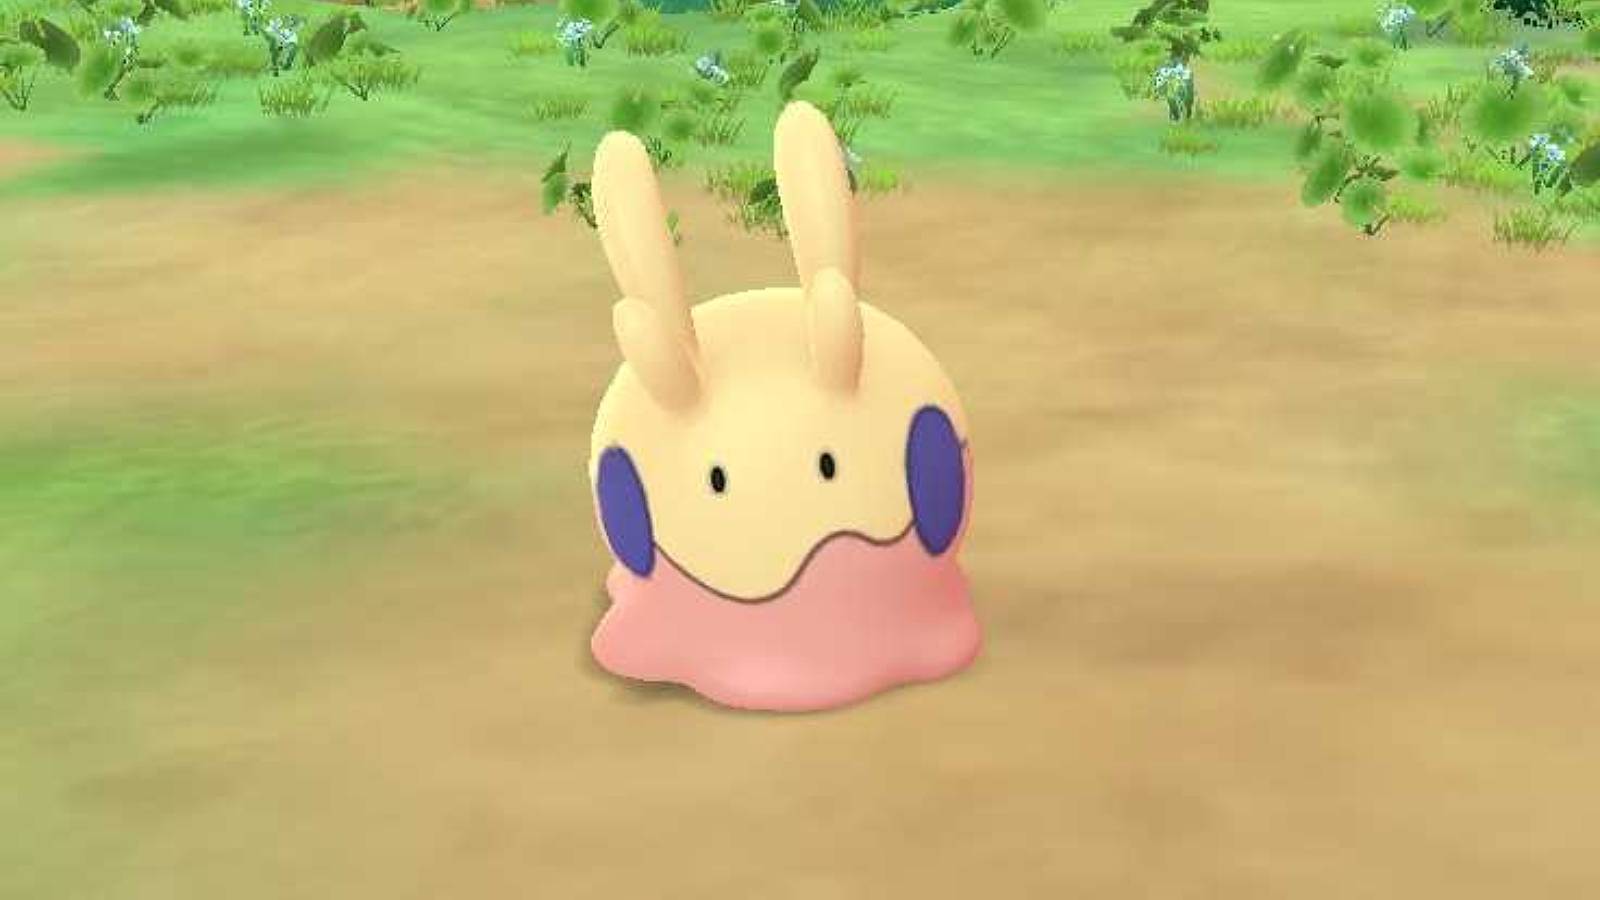 The Pokemon Goomy appears in a screenshot from Pokemon Go